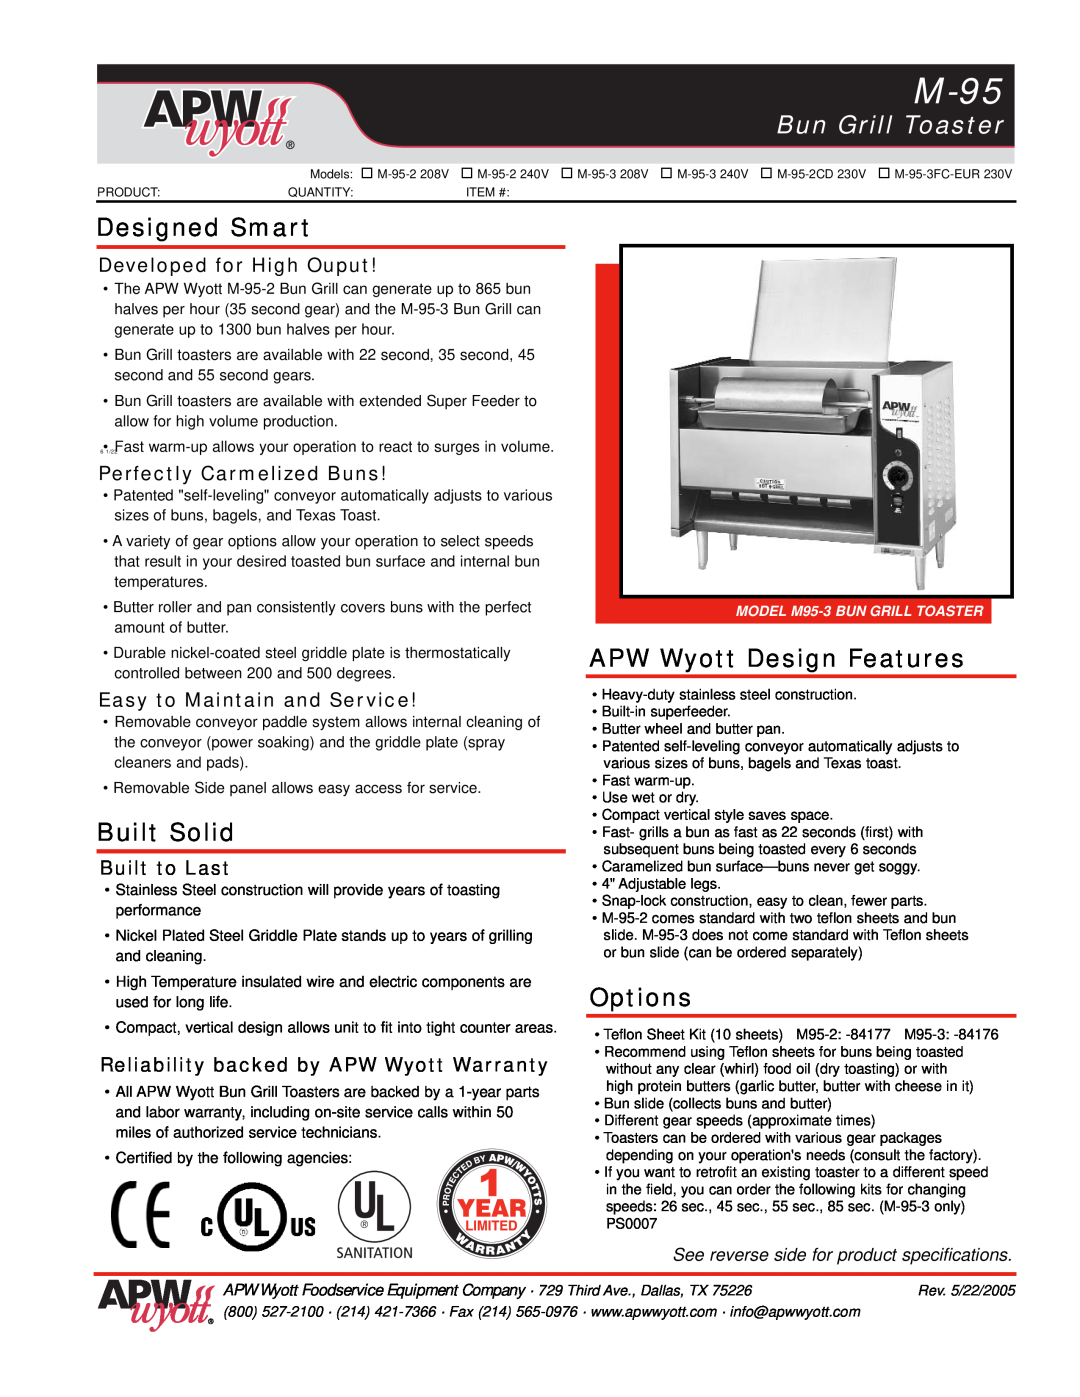 APW Wyott M-95-2 240V warranty Bun Grill Toaster, Designed Smart, Built Solid, APW Wyott Design Features, Options 